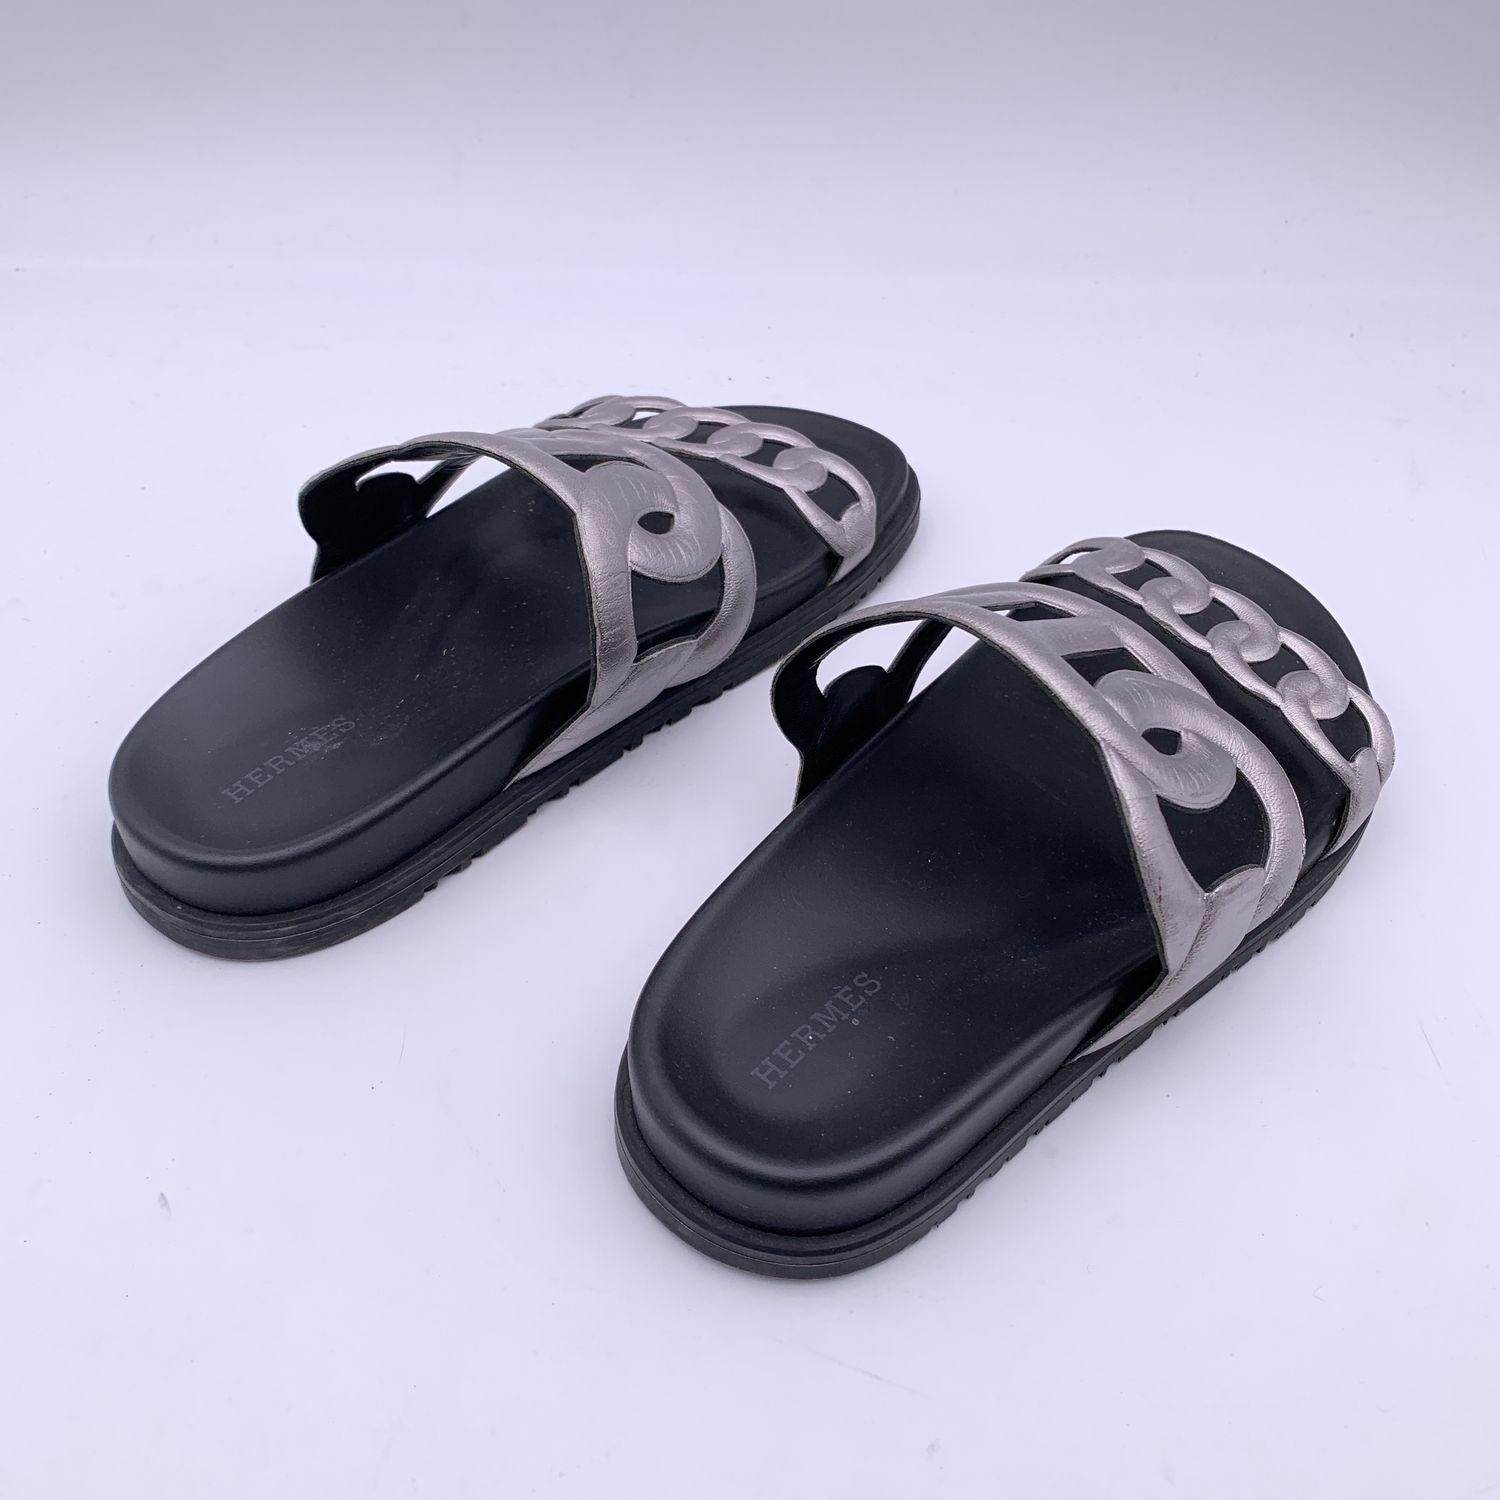 Black Hermes Silver Leather Extra Slide Sandals Shoes Size 37